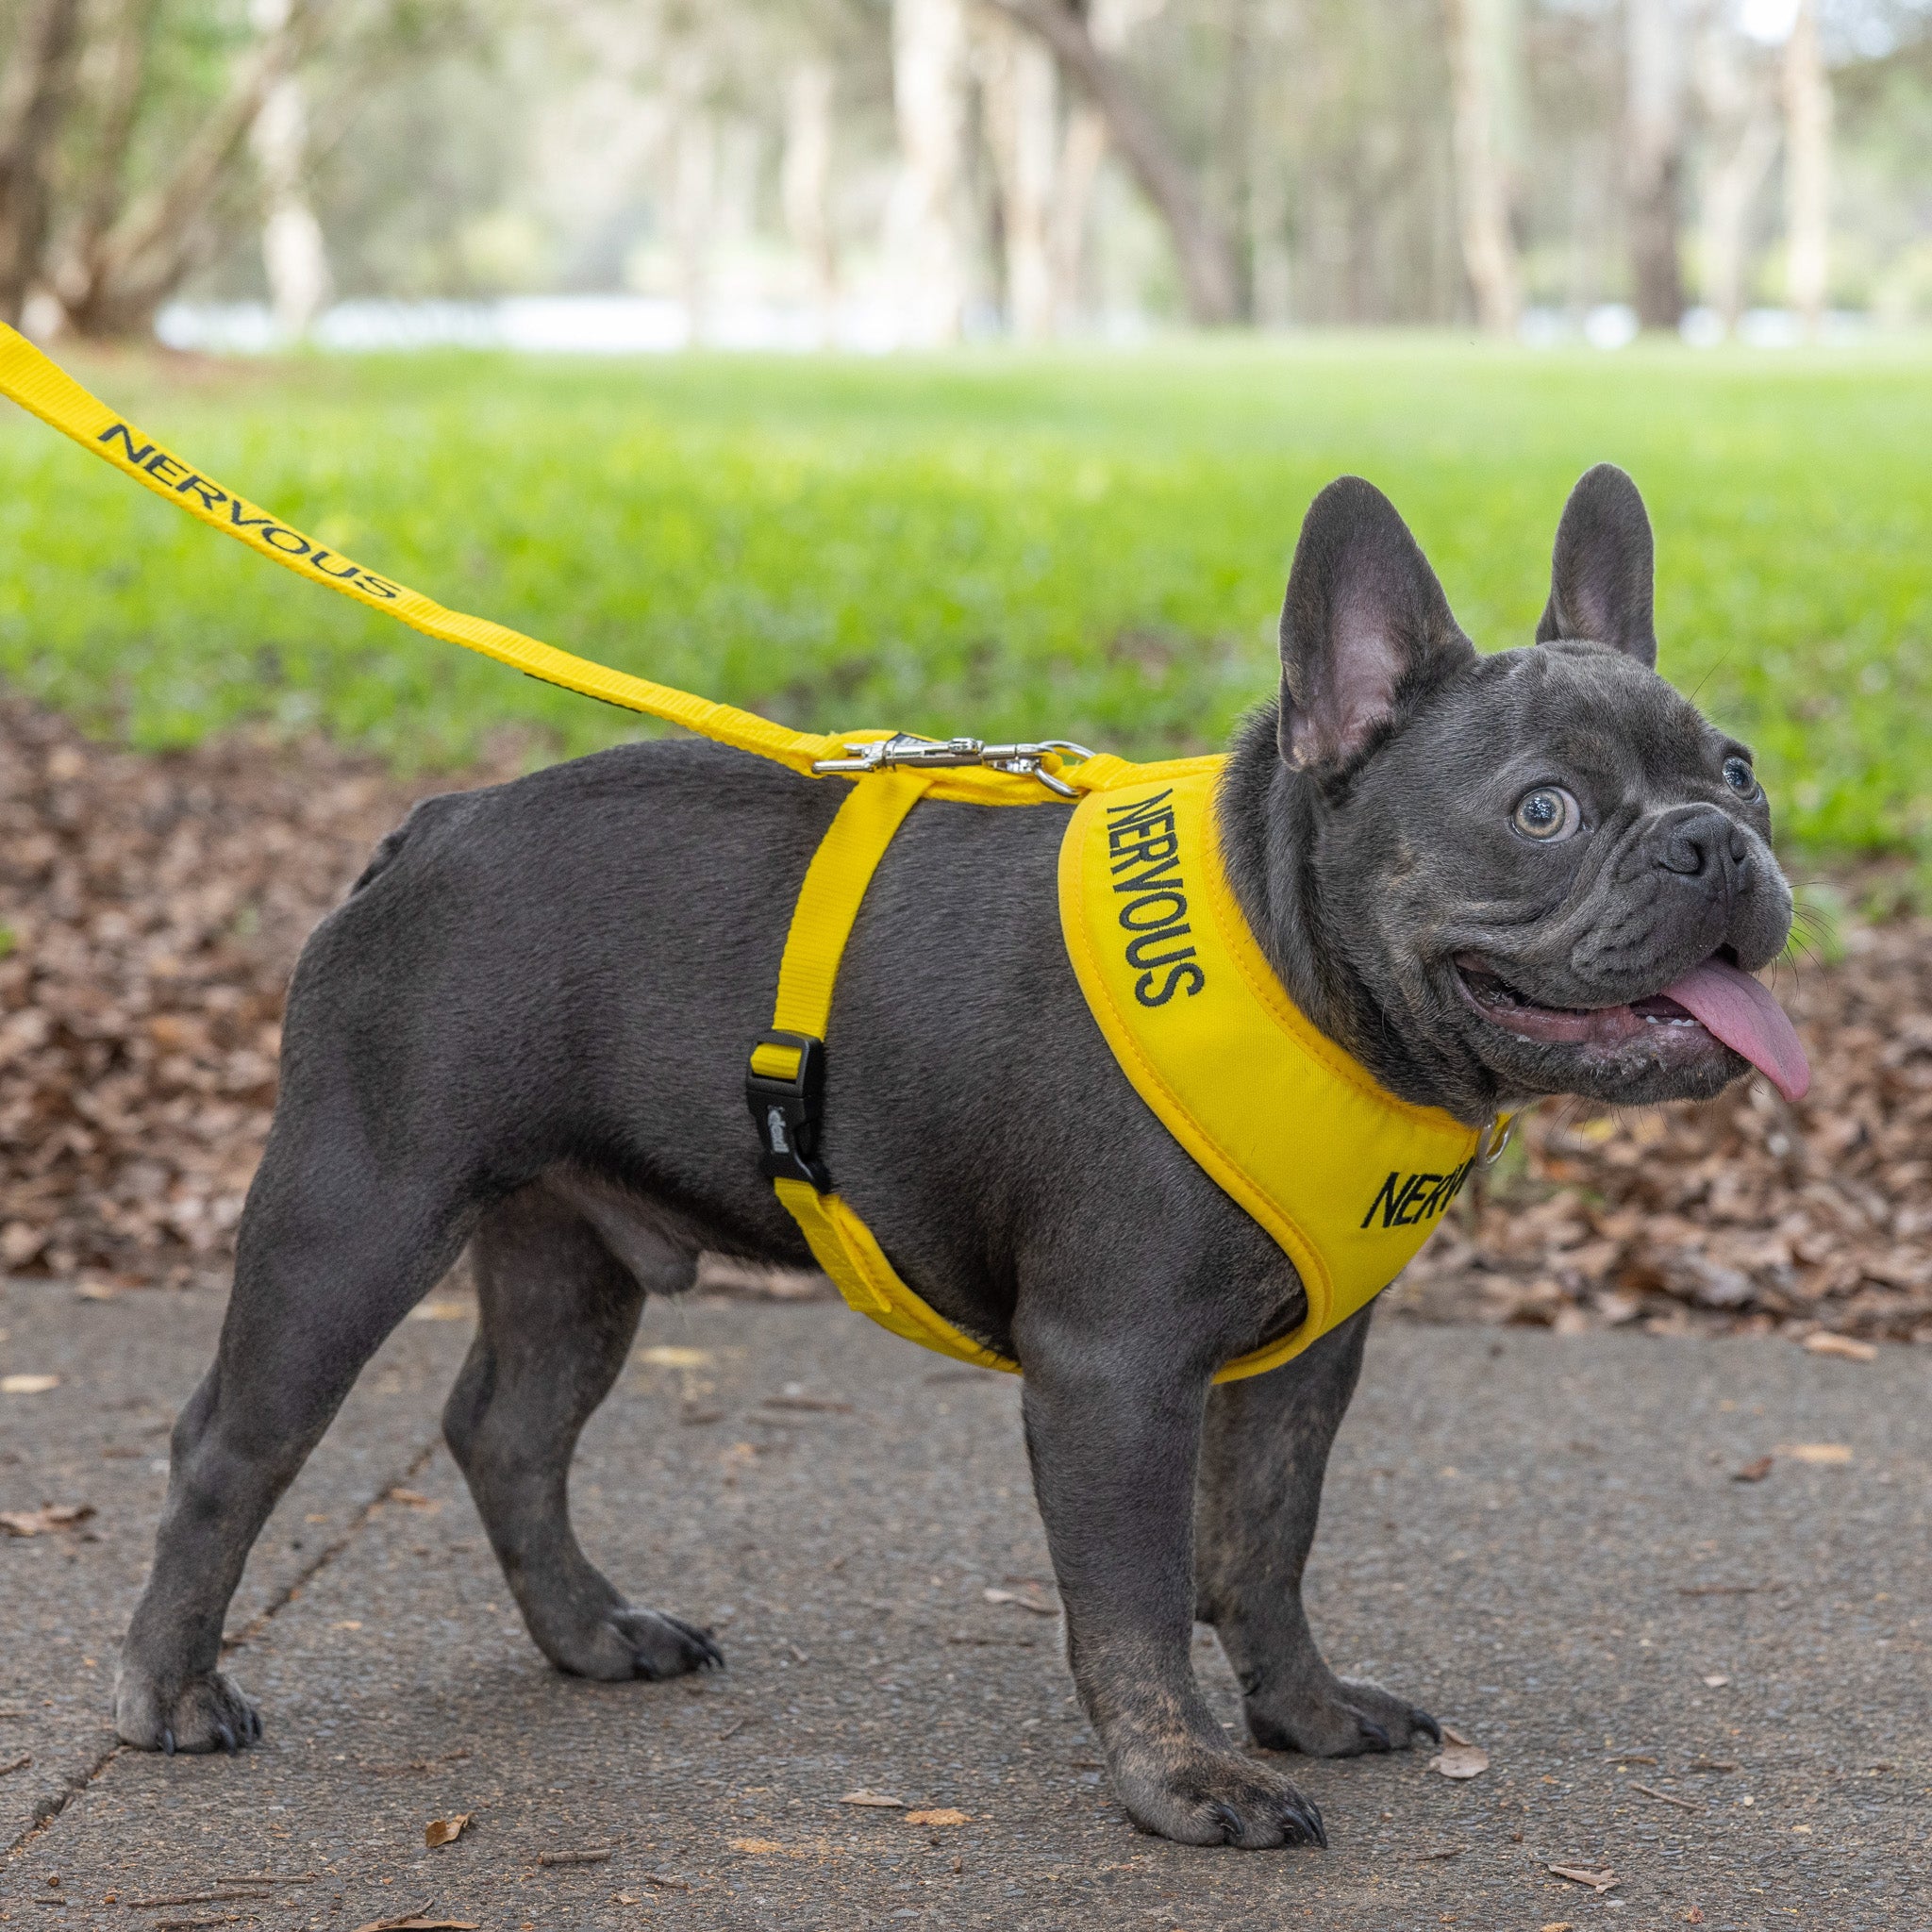 Dexil Friendly Dog Collars Yellow NERVOUS Medium adjustable Vest Harness